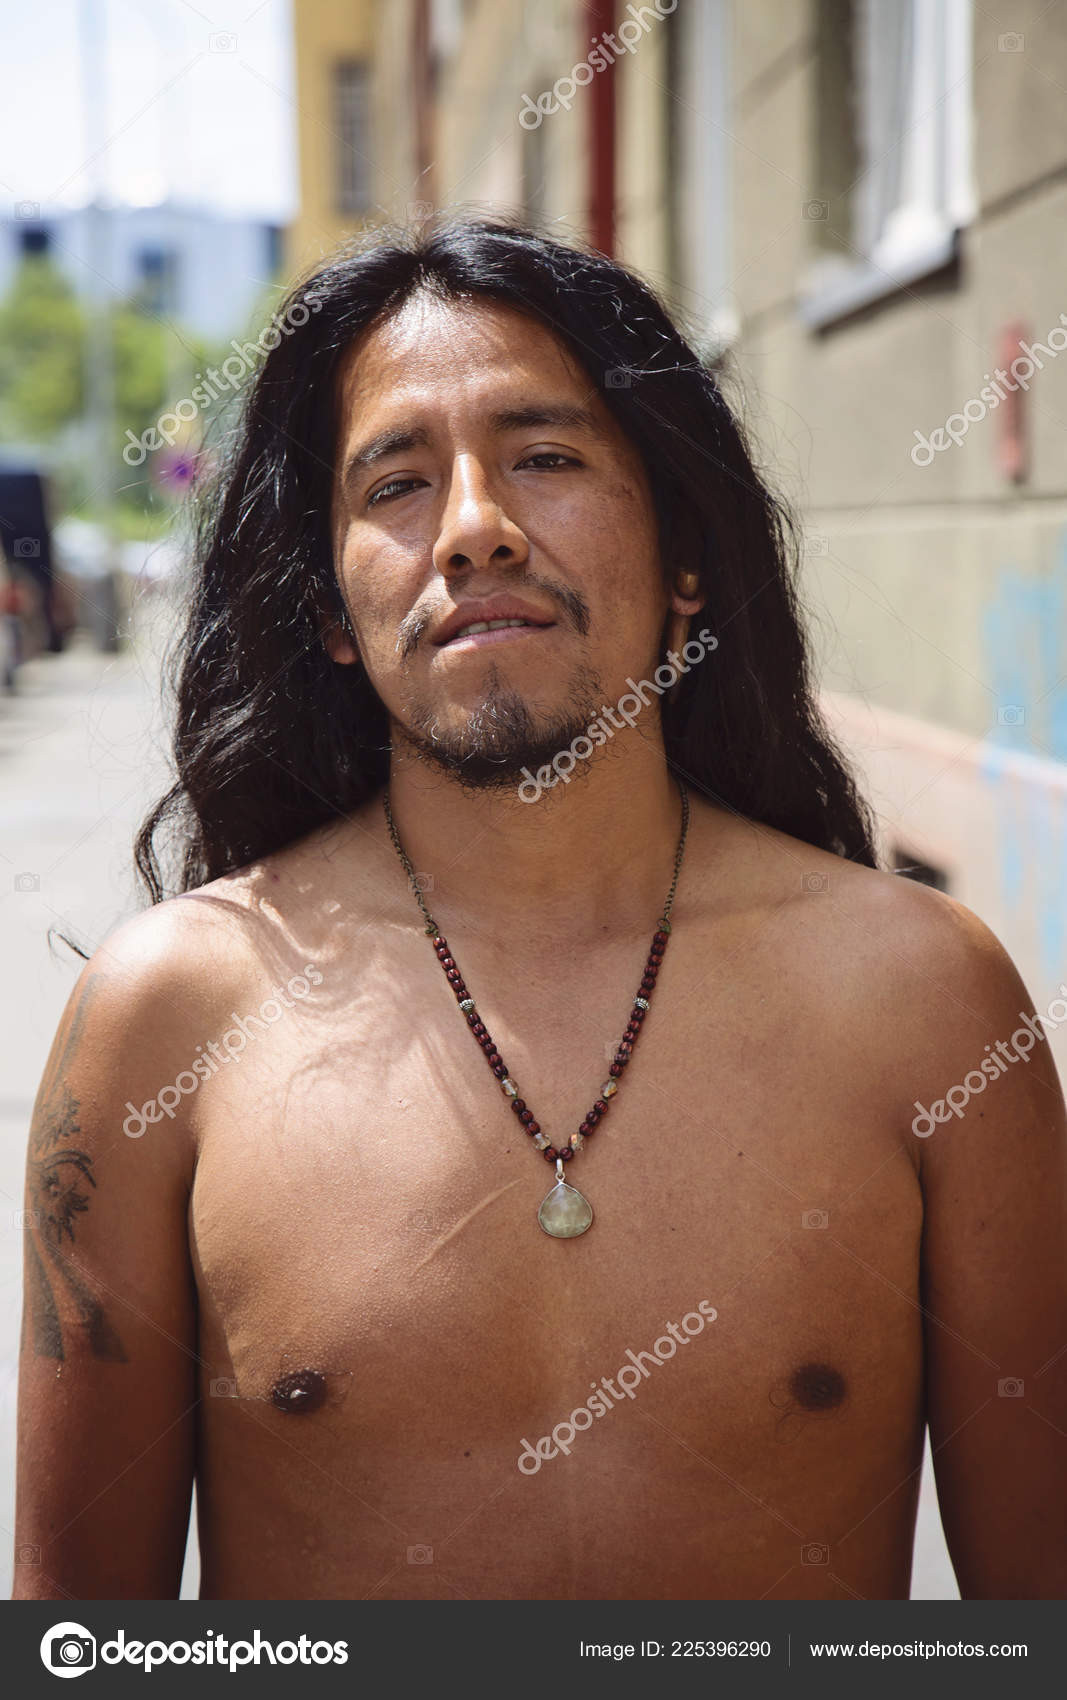 depositphotos_225396290-stock-photo-city-portrait-young-latino-man.jpg